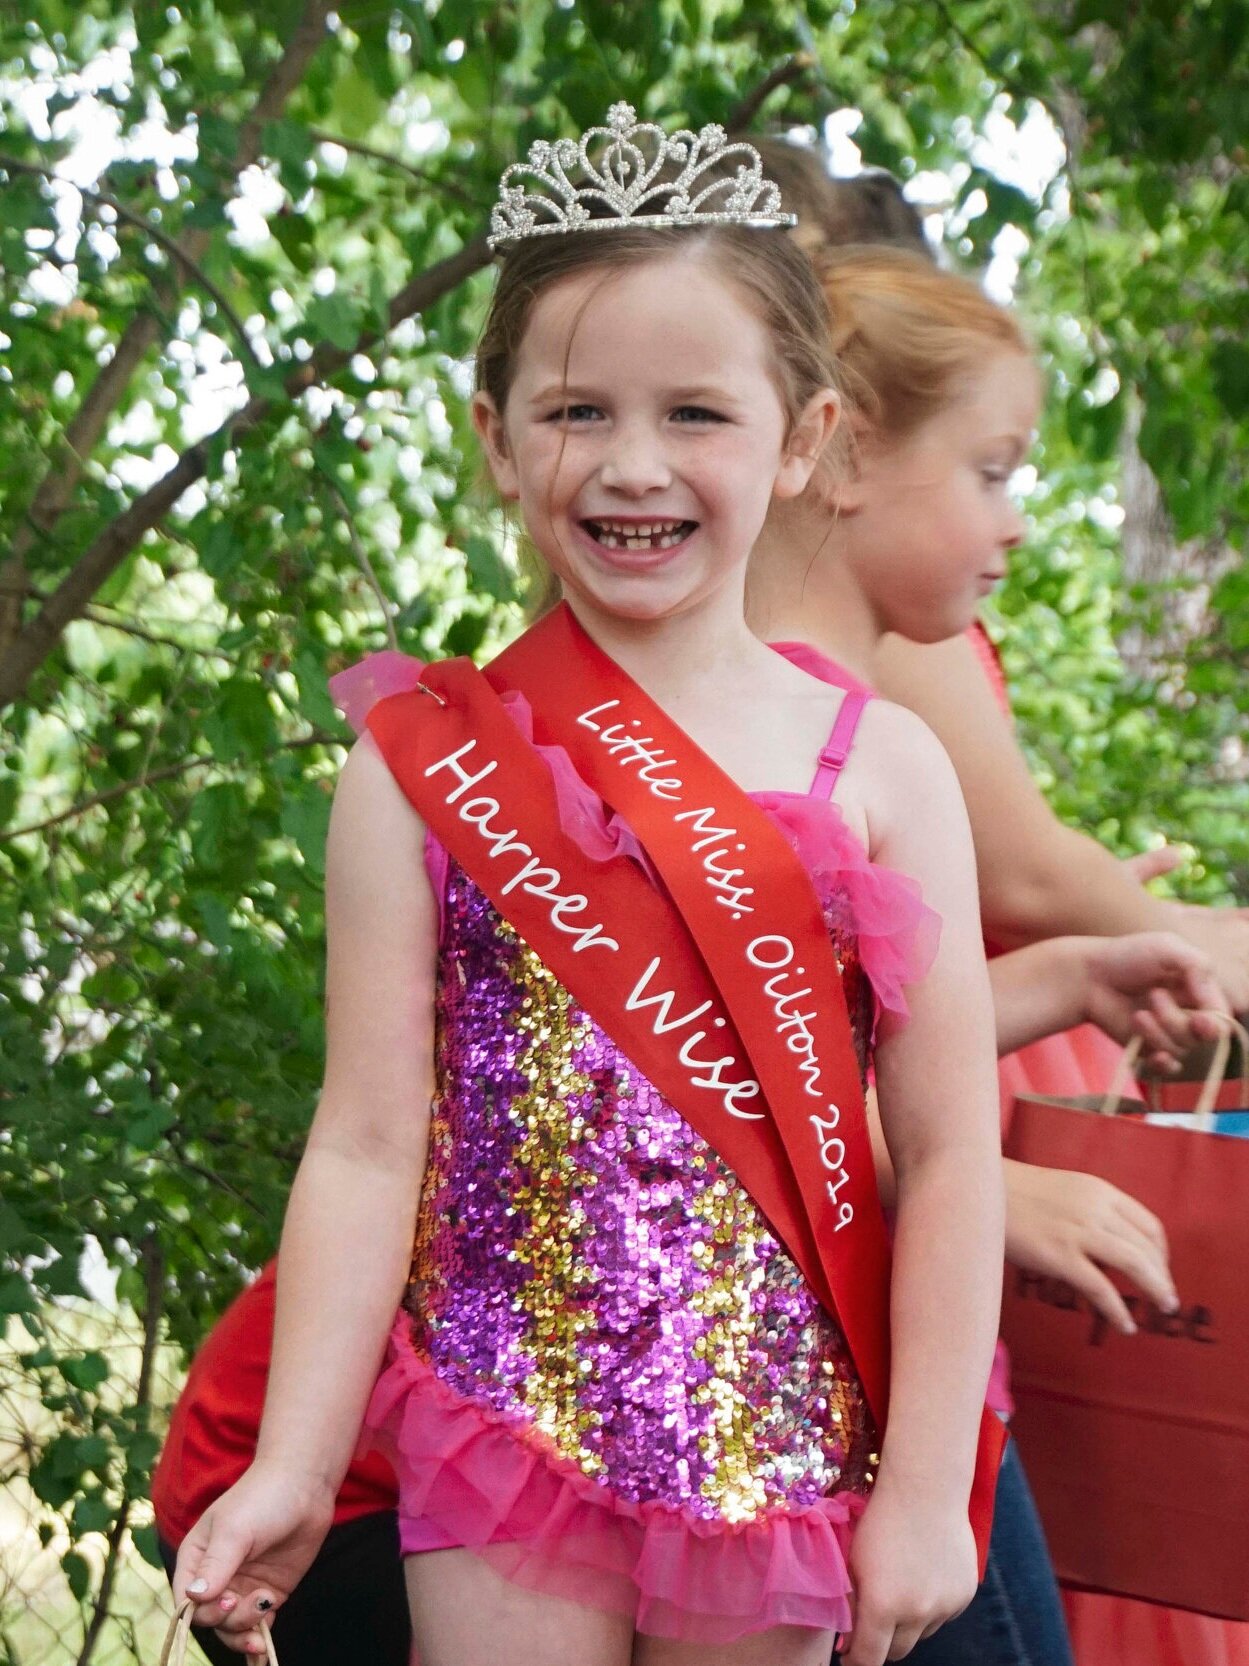 Harper Wise won the Little Miss Oilton